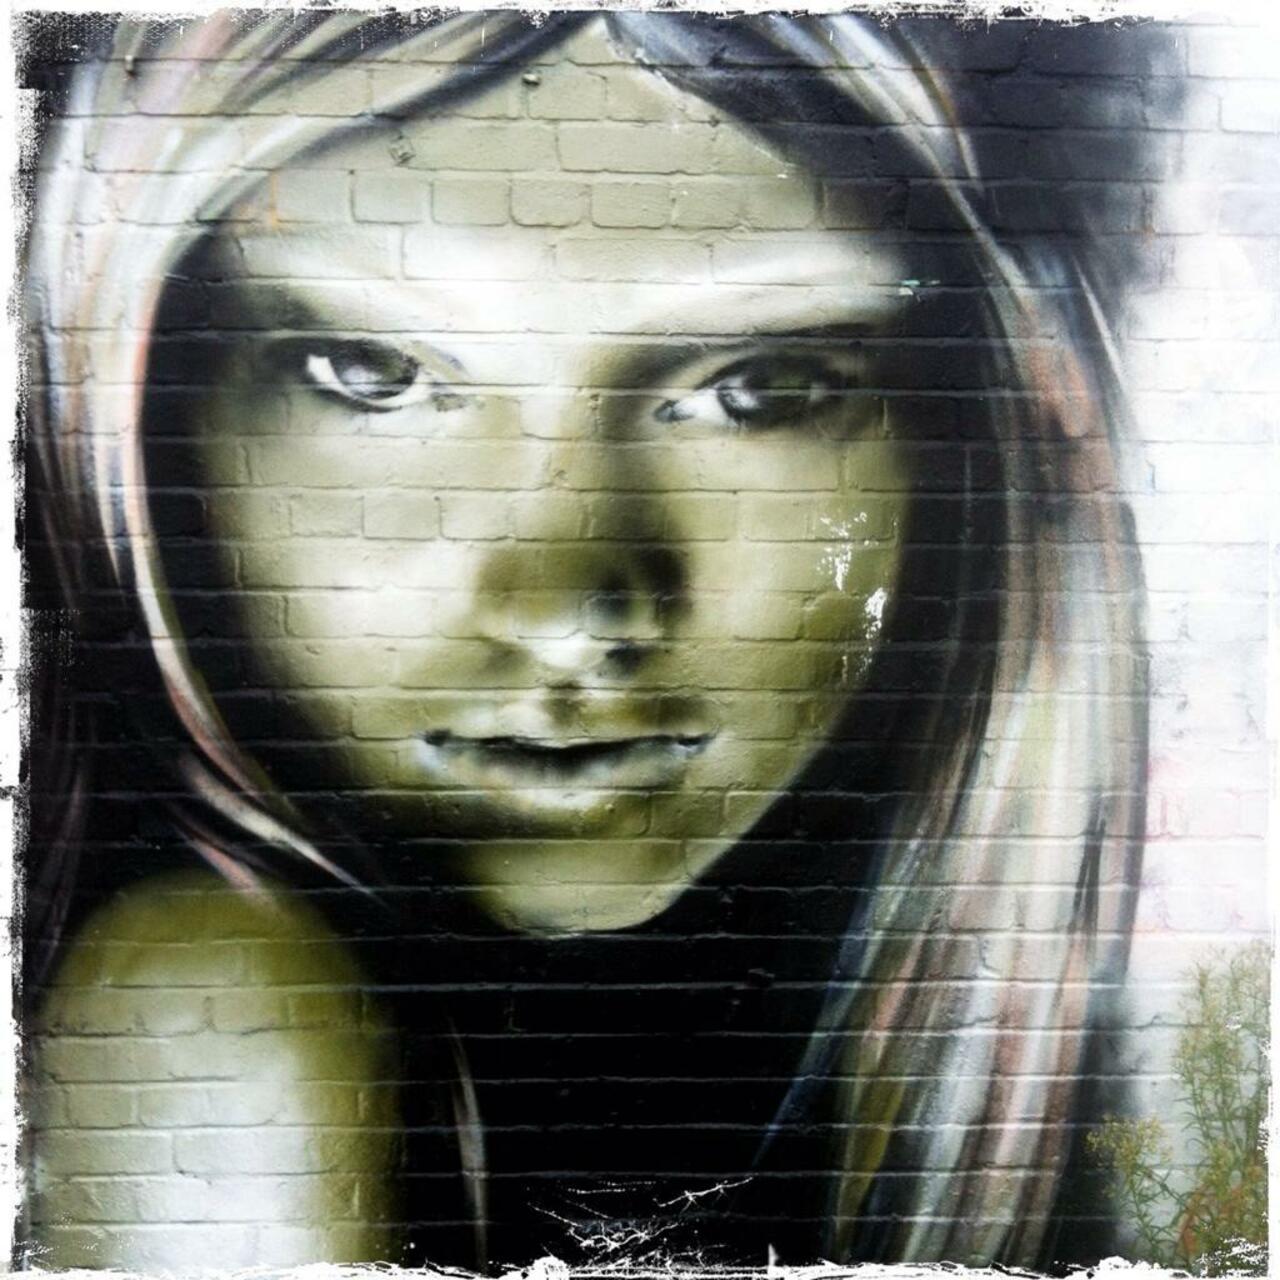 Beautiful mural found at the Hollywell Lane car park #art #streetart #graffiti http://t.co/uwOUqoDiNC